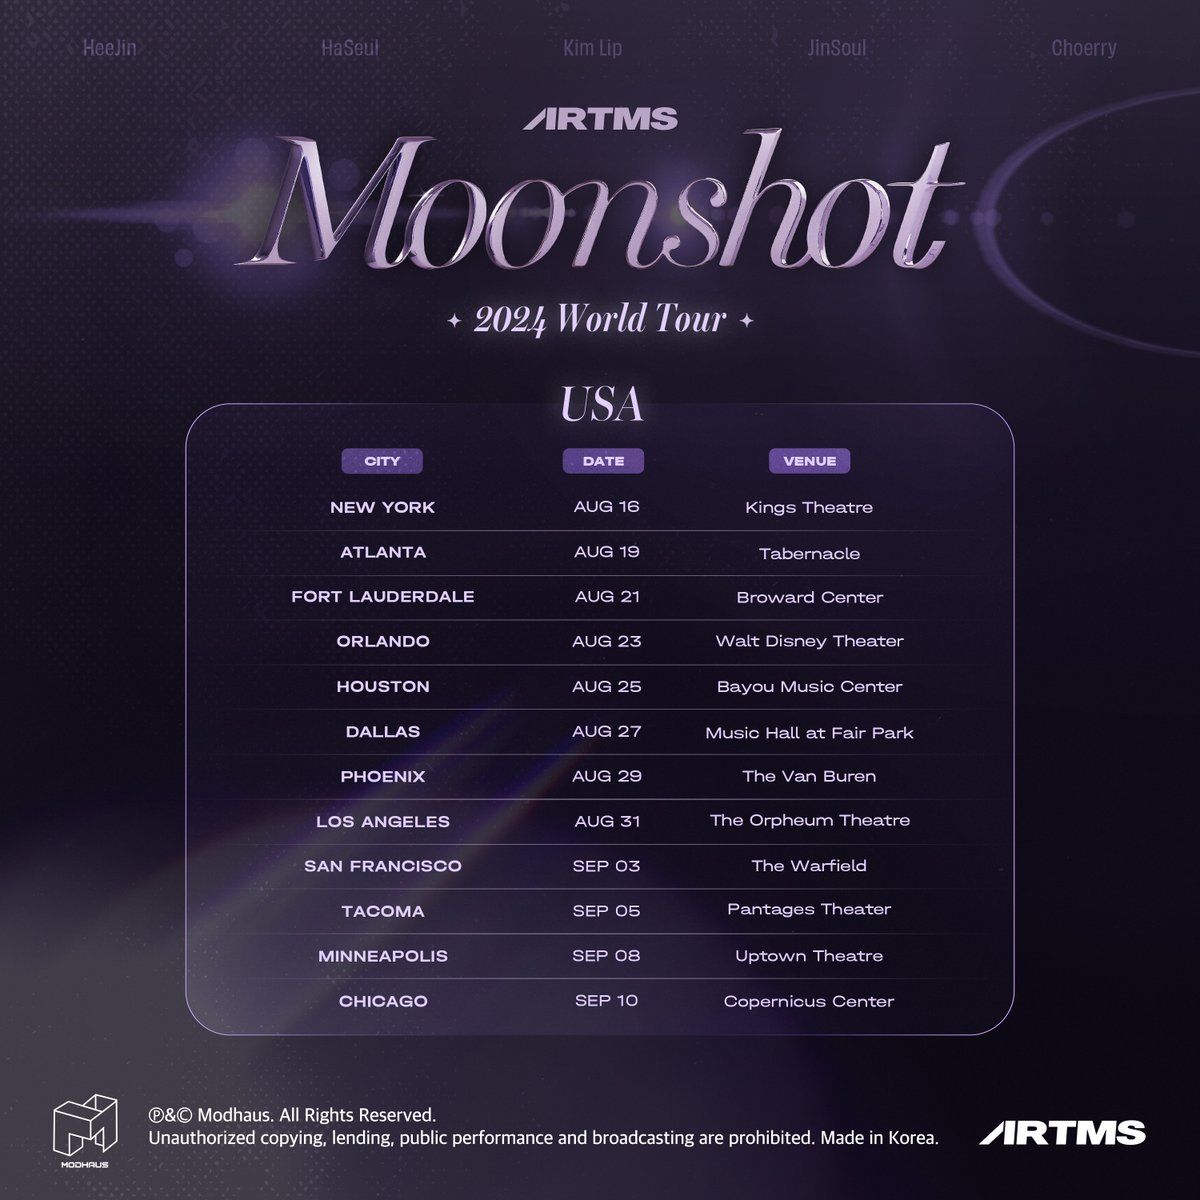 2024 ARTMS World Tour <Moonshot> in US Ticket sales : 05.17.2024 9AM PST 📍 08.16.2024 NEW YORK, NY 🔗 bit.ly/3USWutT 📍 08.19.2024 ATLANTA, GA 🔗 bit.ly/3y6oEsr 📍 08.21.2024 FORT LAUDERDALE, FL TBD 📍 08.23.2024 ORLANDO, FL 🔗 bit.ly/44EF9Ze 📍